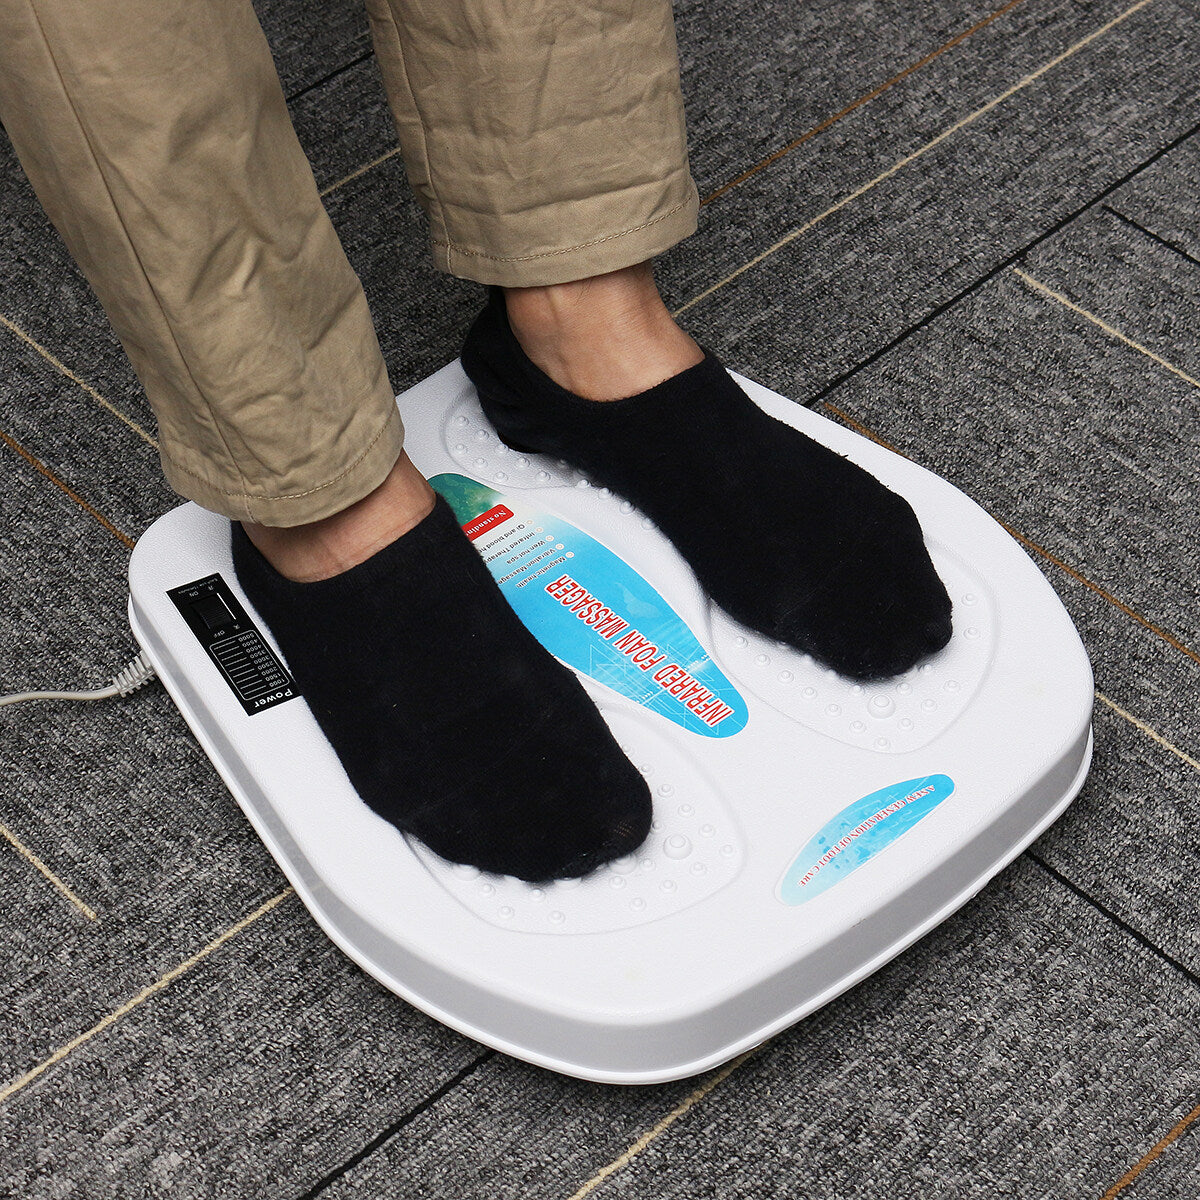 VibraStep Foot Massager